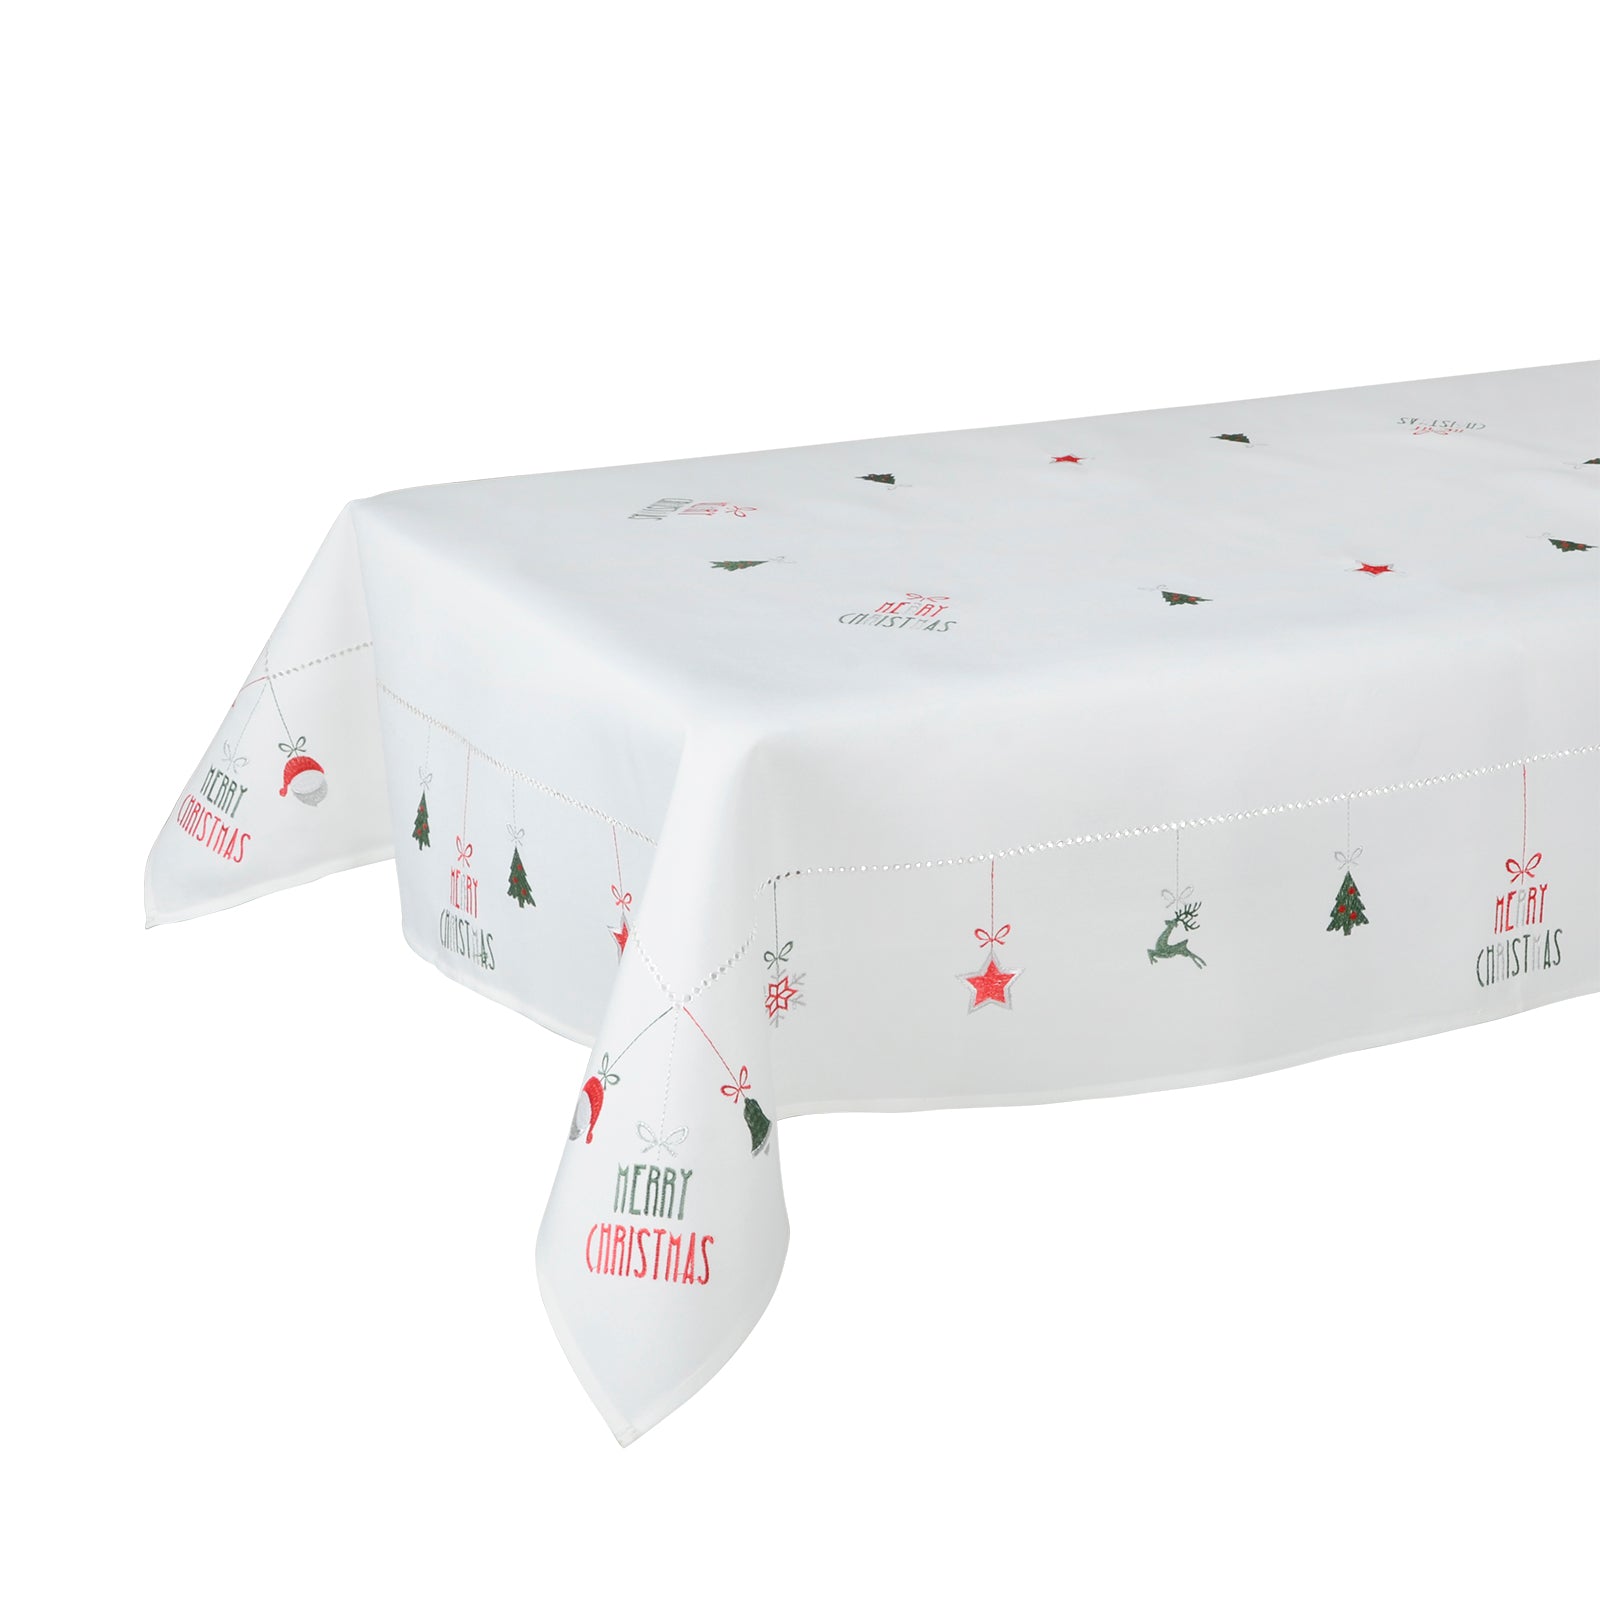 Mr Crimbo Fun Merry Christmas Embroidered Tablecloth - MrCrimbo.co.uk -XS5895 - White -christmas home decor